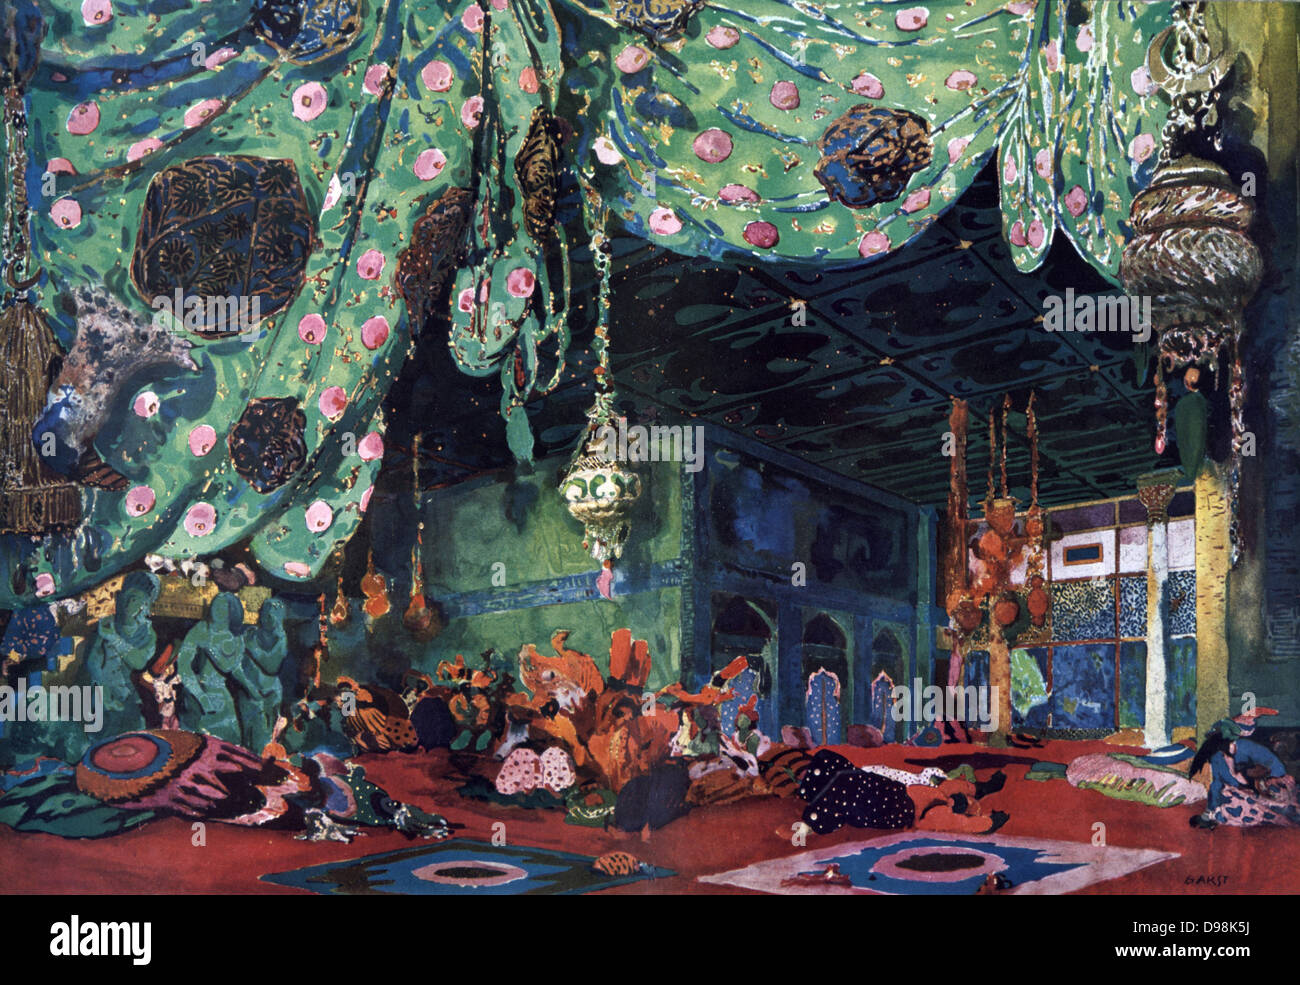 Scenery design by Leon Bakst (1866-1924) 'Scheherazade' produced in 1910 by Sergei Diaghilev's Ballets Russes. Music by Nikolai Rimsky-Korsakov, choreography by Michel Fokine. Stock Photo